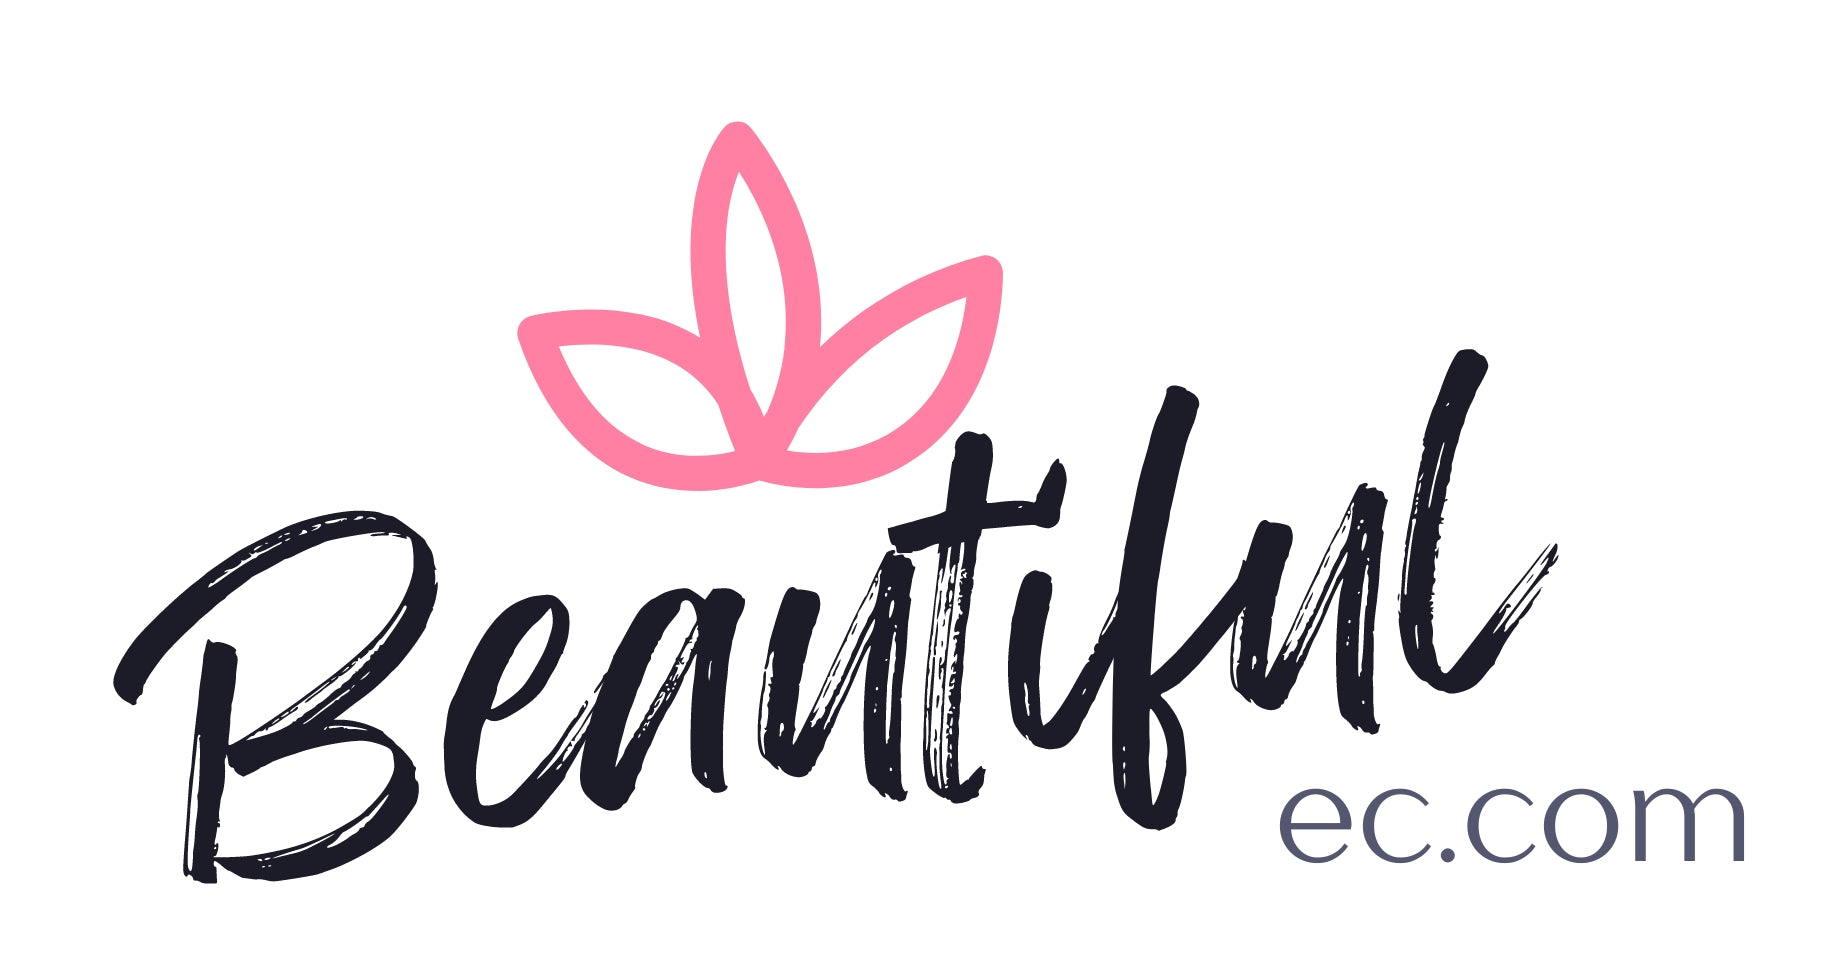 beautifulec.com - Beautiful collagen supplements for women